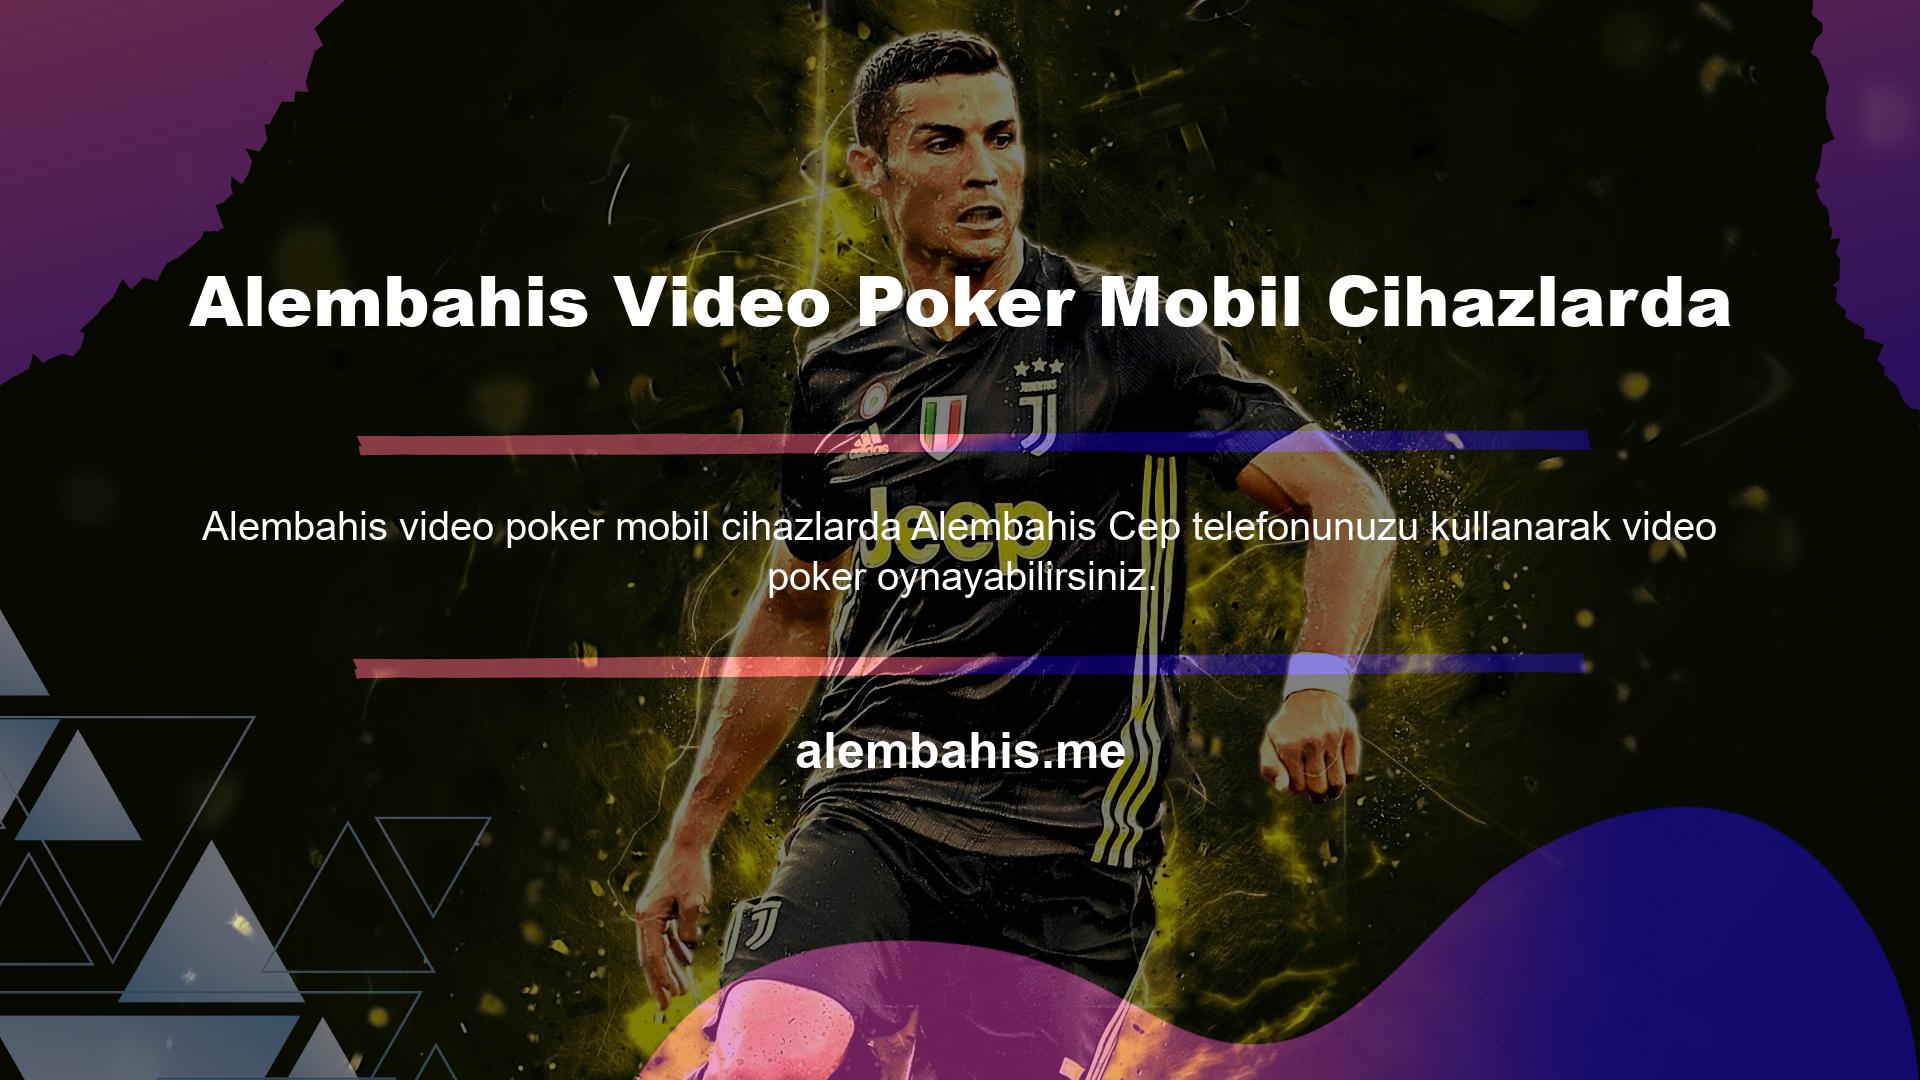 Alembahis Video Poker Mobil Cihazlarda